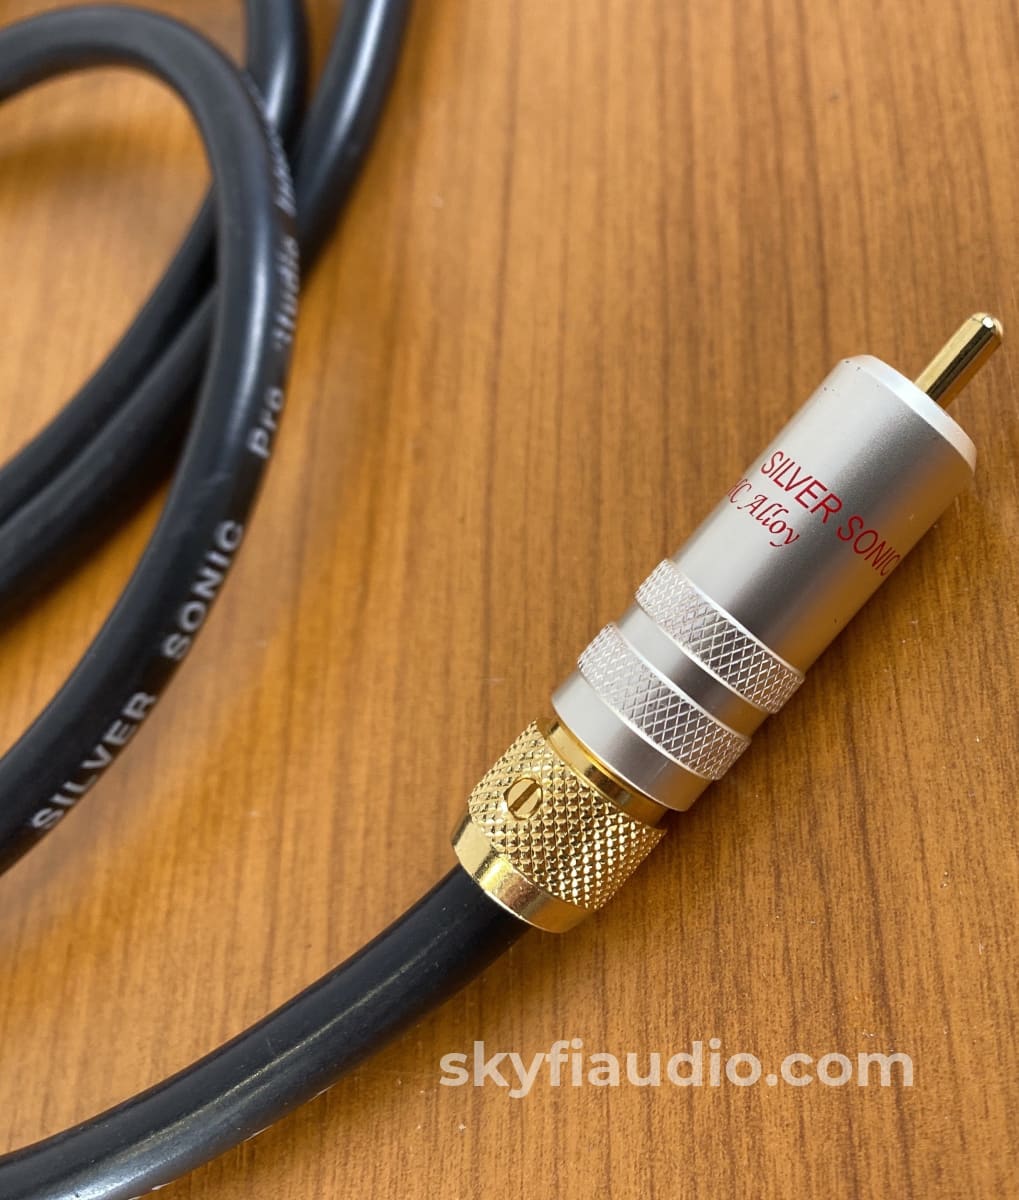 Dh Labs Silver Sonic Air Matrix Rca Audio Cables - 1M